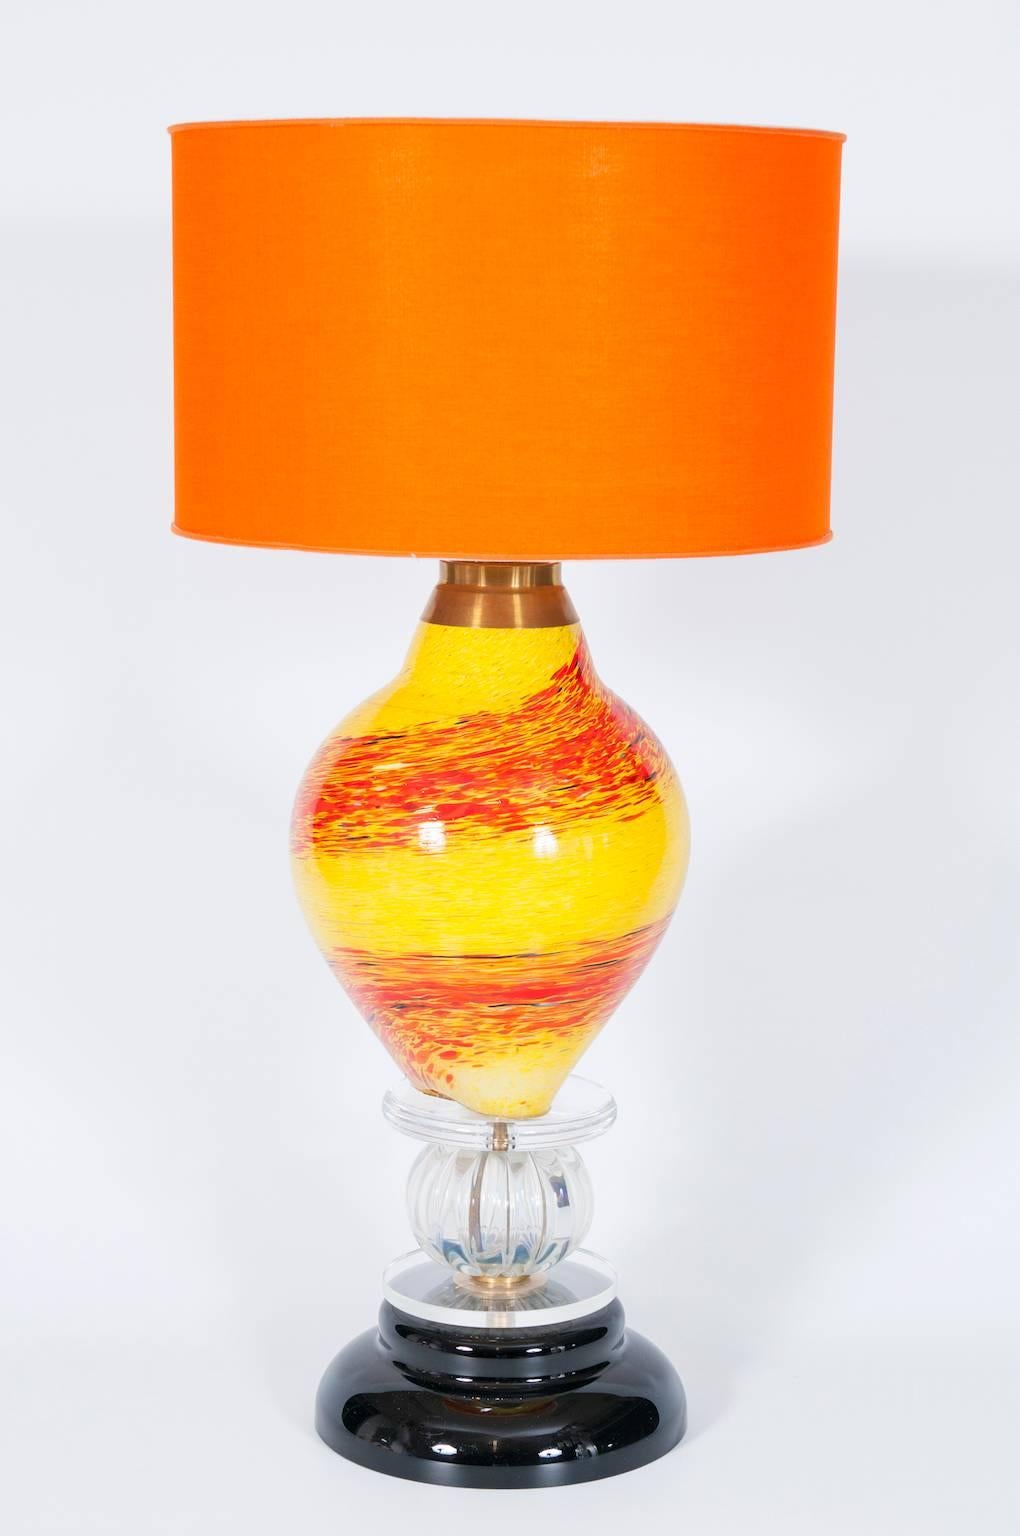 Italian Venetian Murano Glass Table Lamp in Multicolor yellow orang 1970s For Sale 3